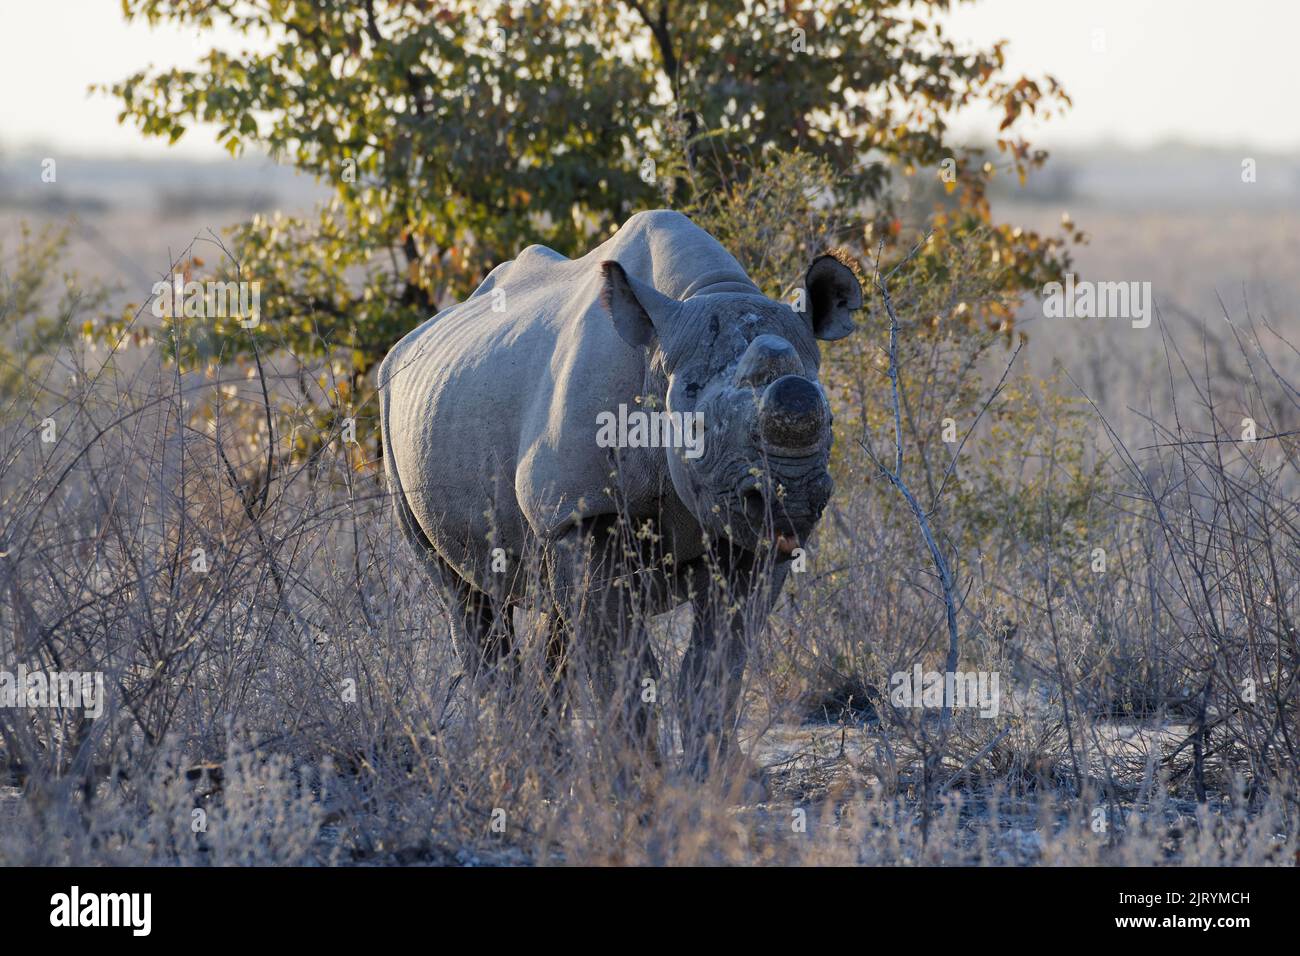 Black rhinoceros (Diceros bicornis) with sawed off horns, anti-poaching measure, adult foraging, Etosha National Park, Namibia, Africa Stock Photo